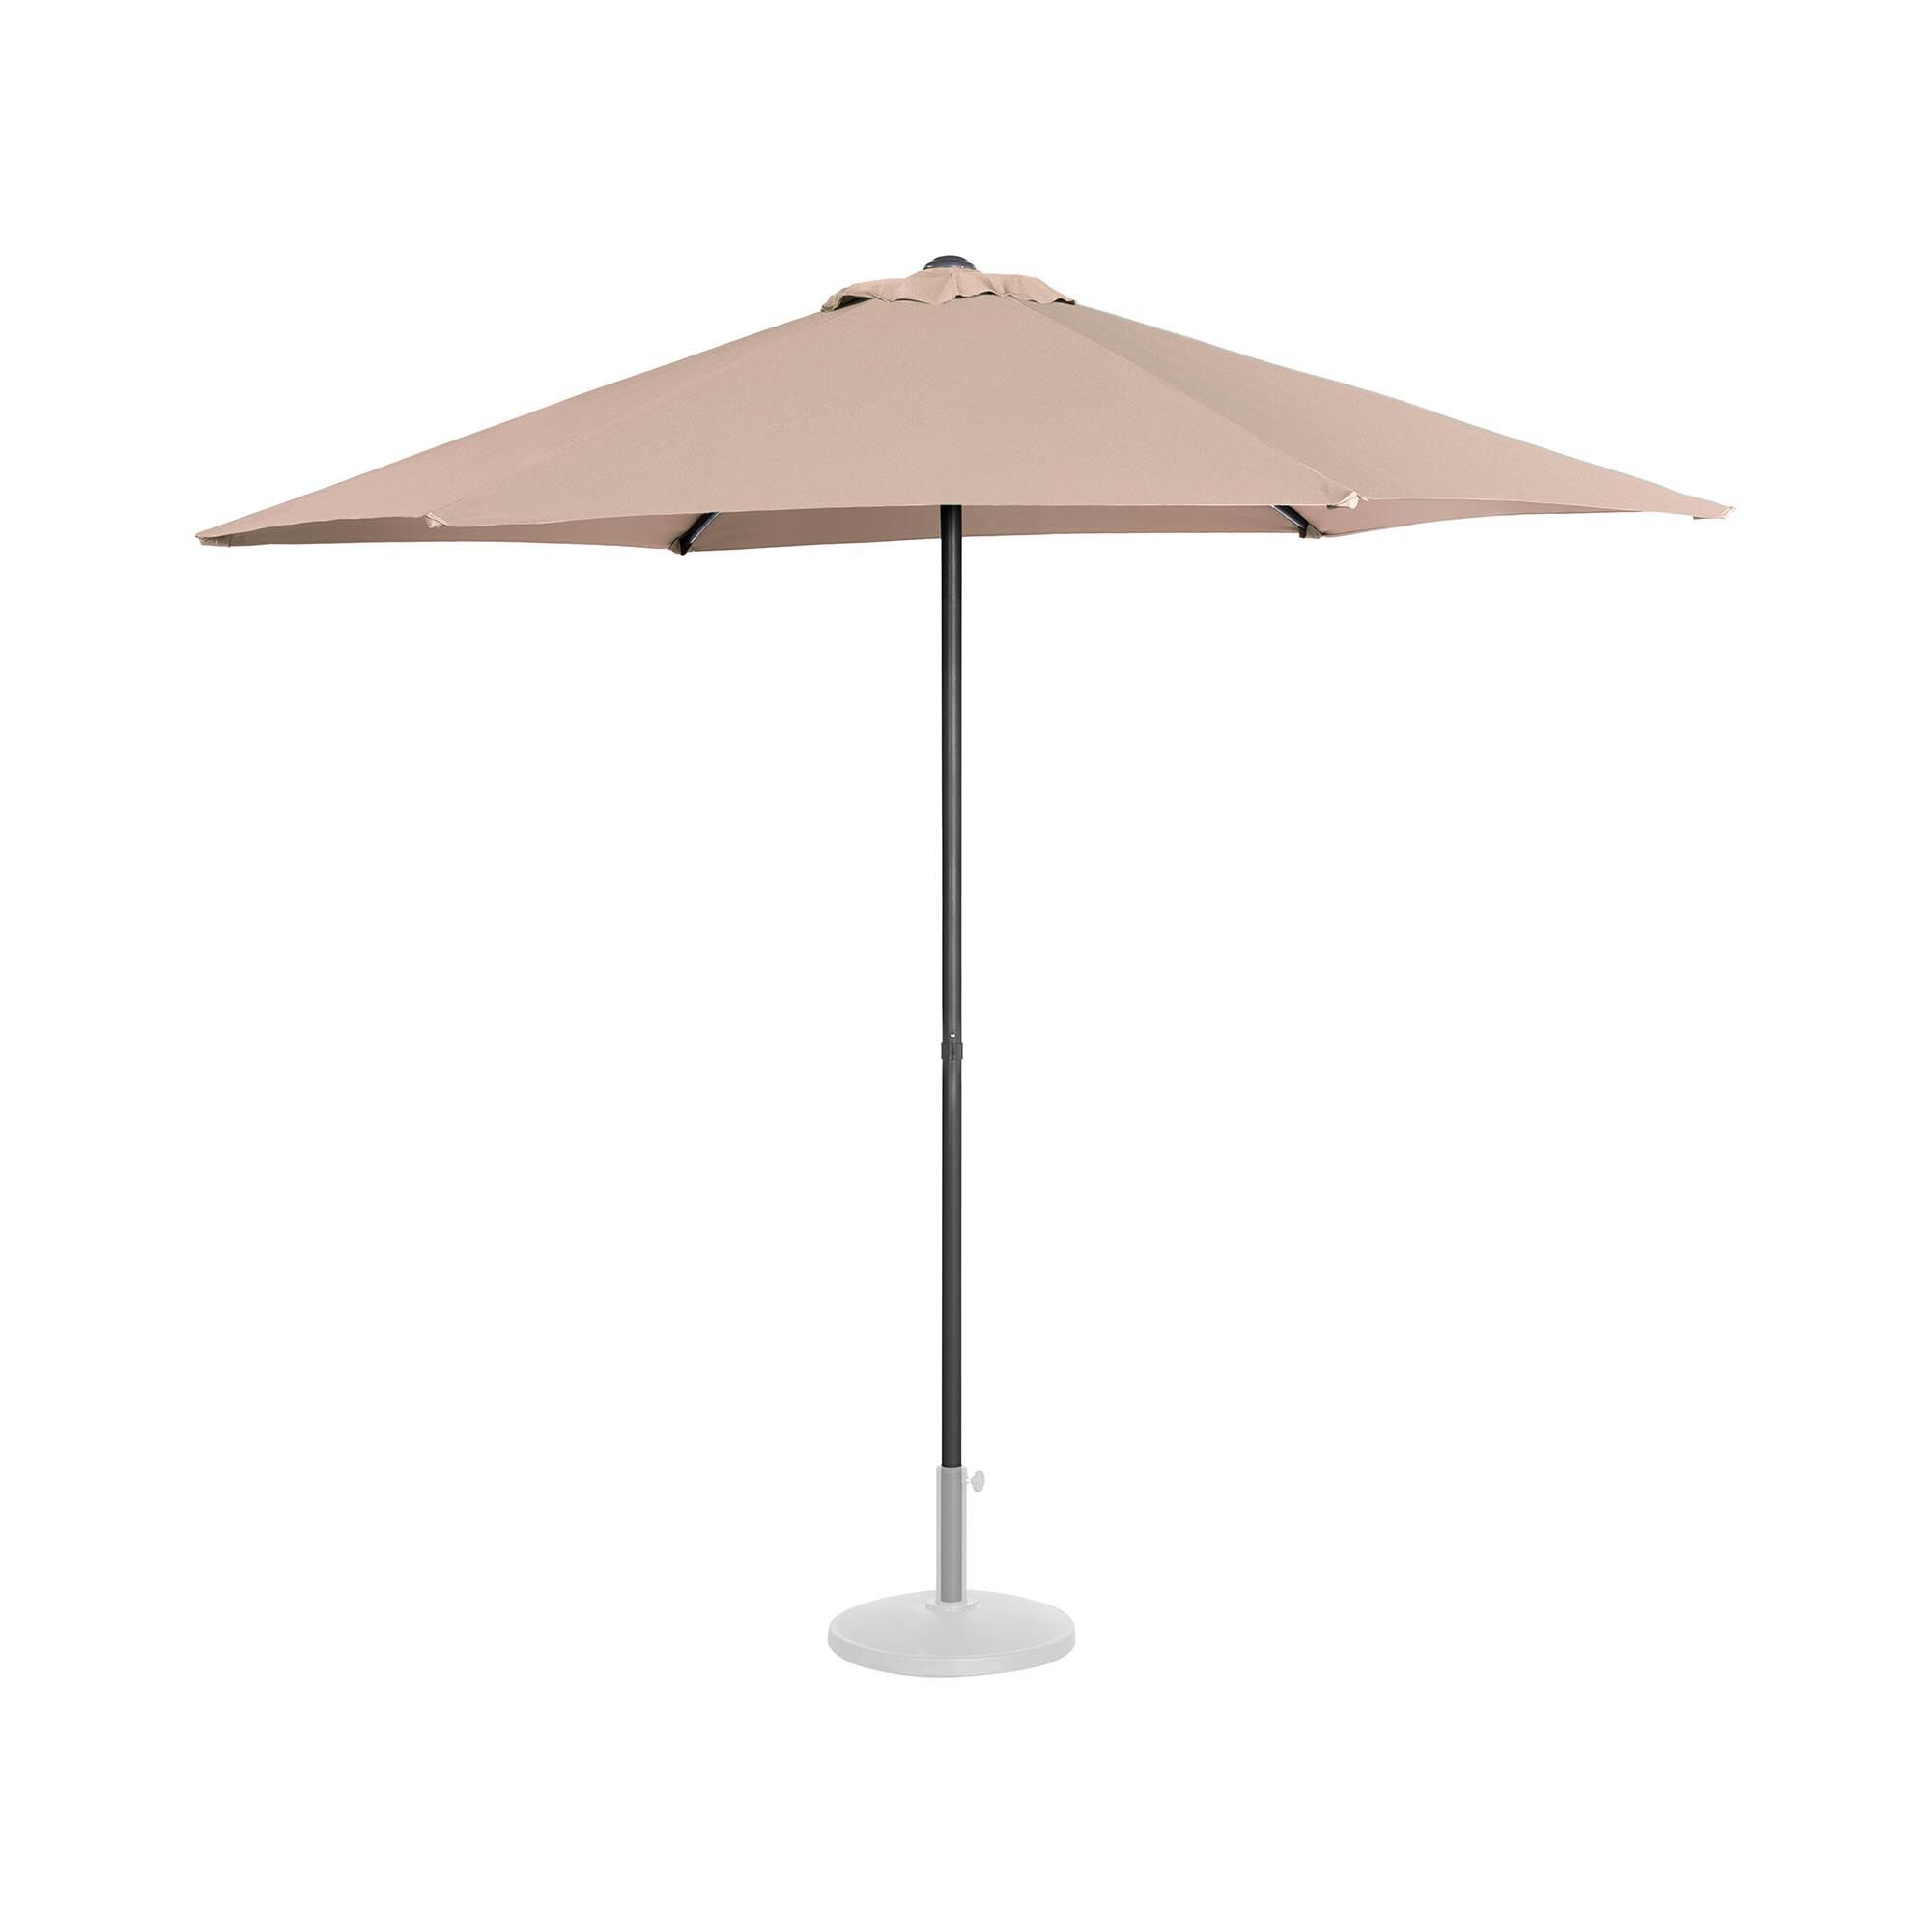 Uniprodo Large Outdoor Umbrella - creme - hexagonal - Ø 270 cm